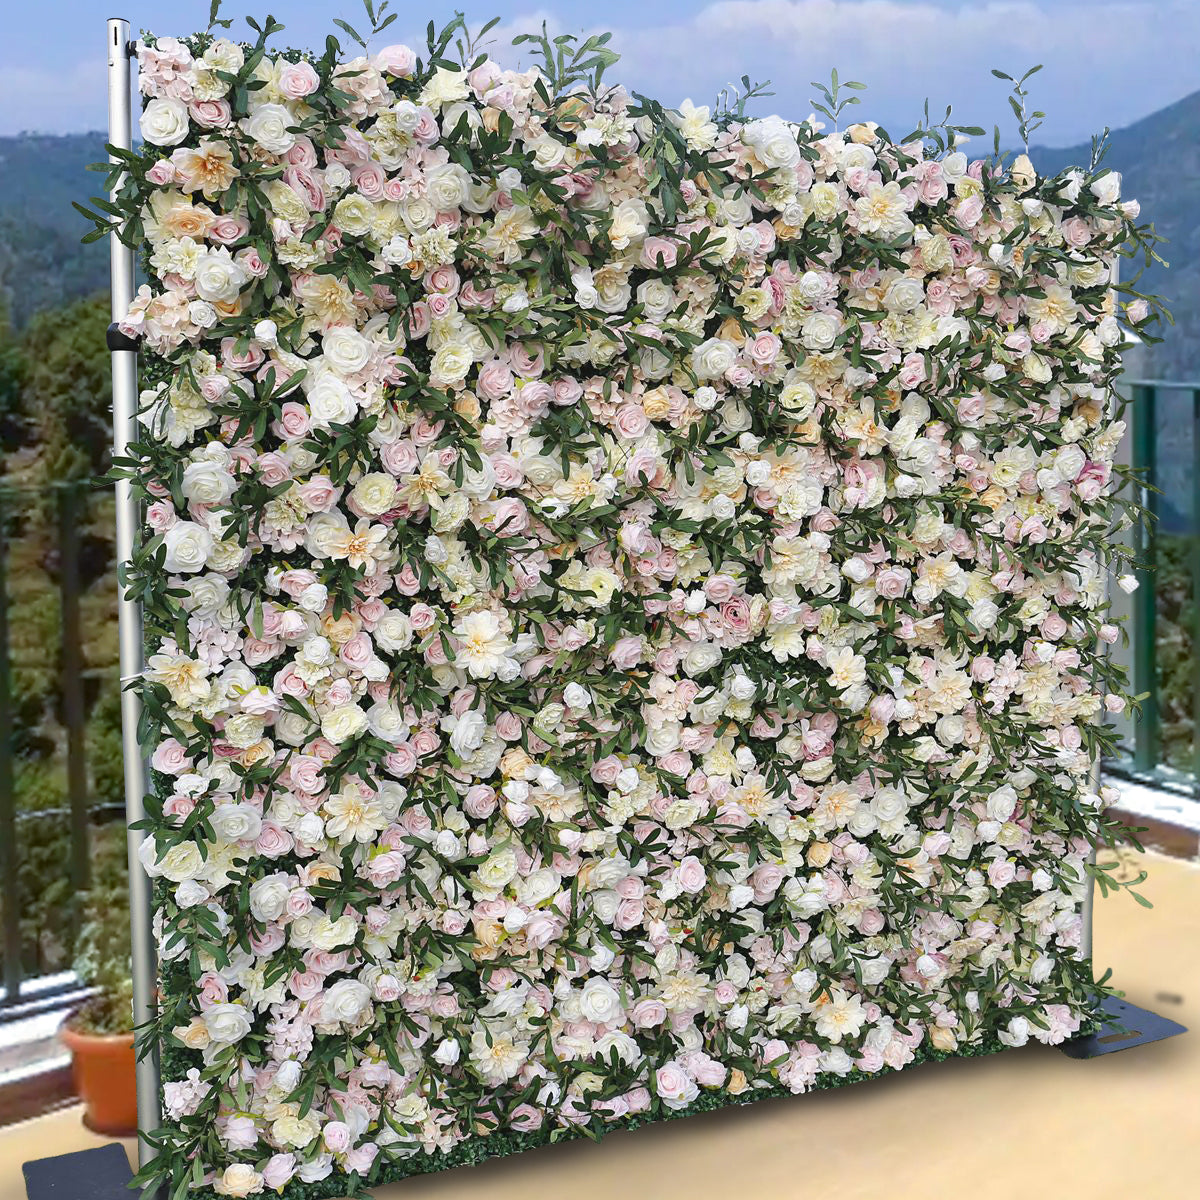 3D Artificial Flower Wall Arrangement Wedding Party Birthday Backdrop Decor HQ9040